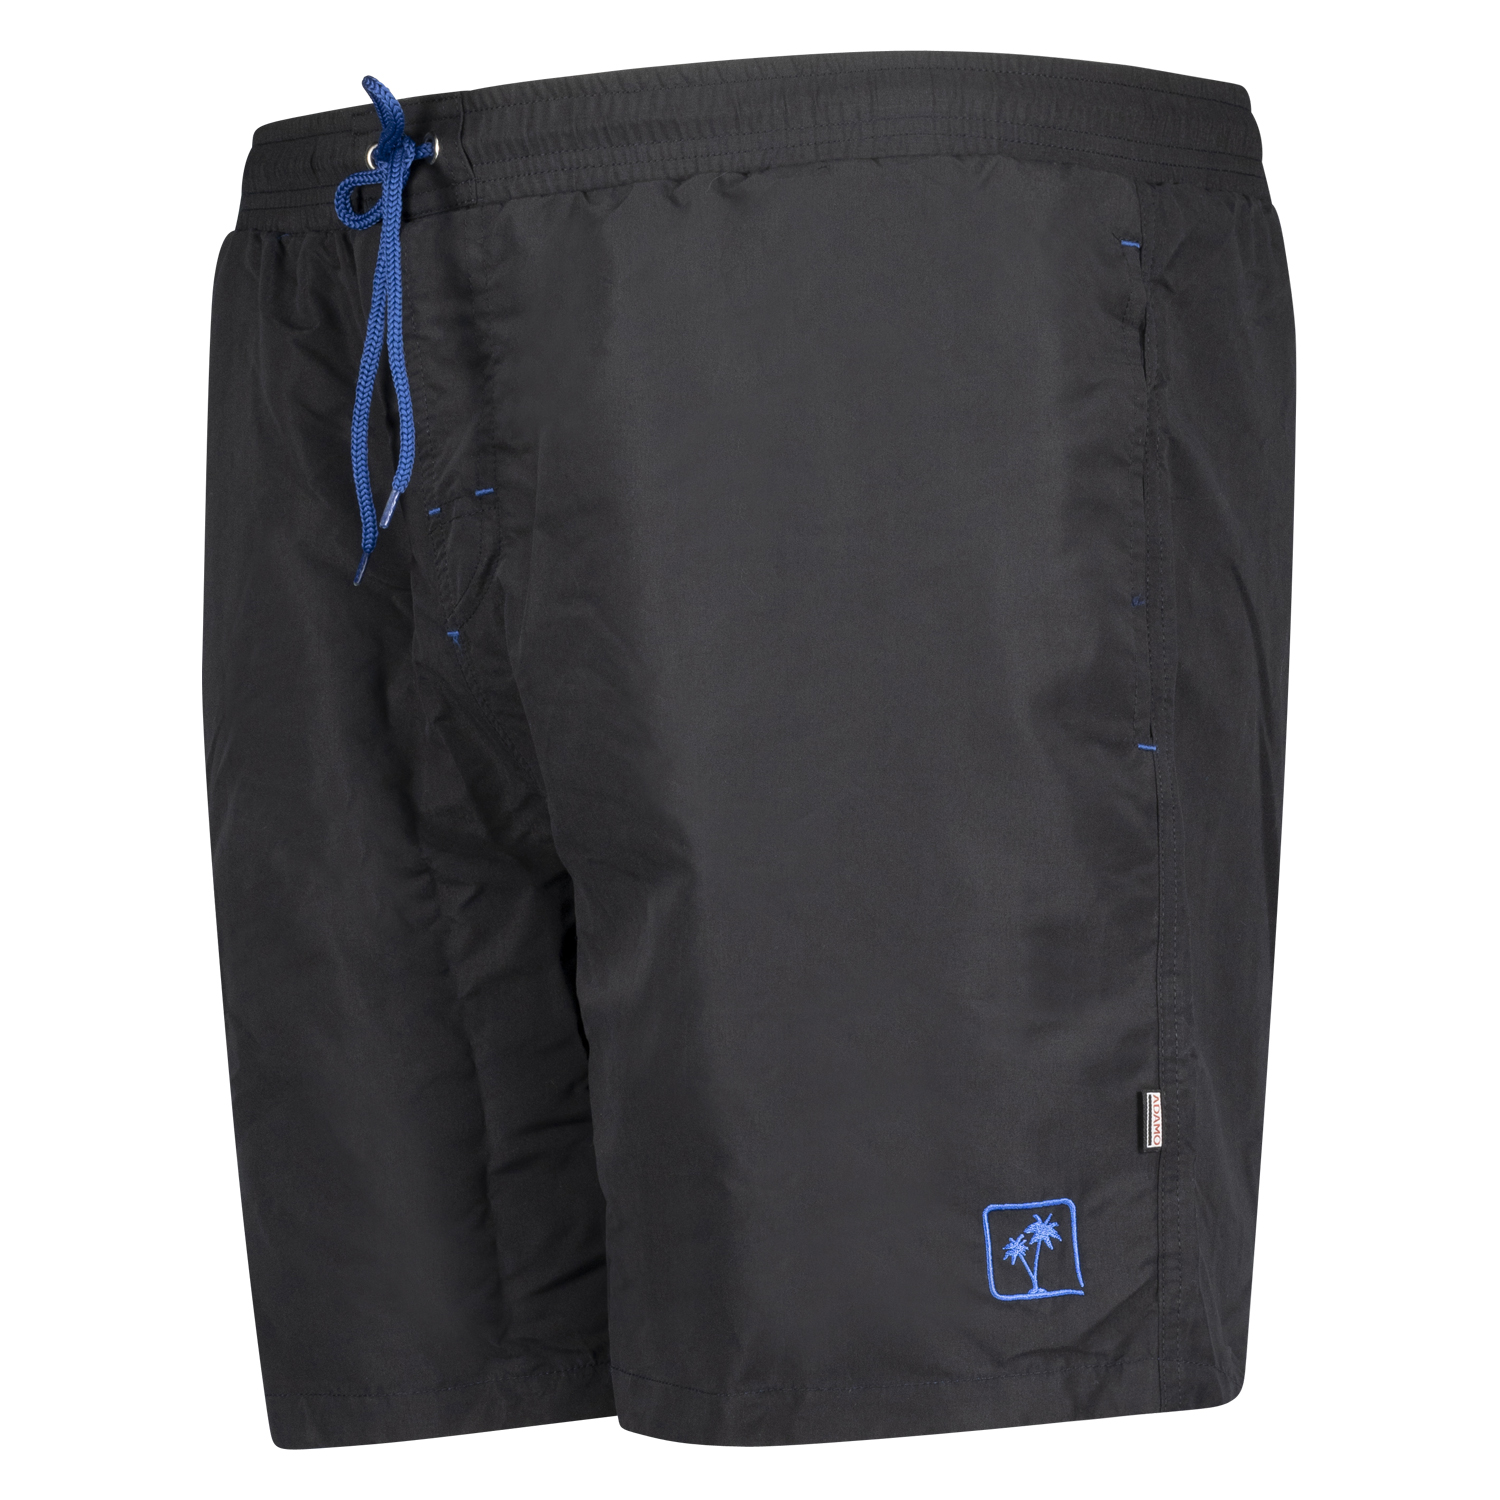 Beach bermuda shorts "Kuba" for men by Adamo in black up to oversize 12XL